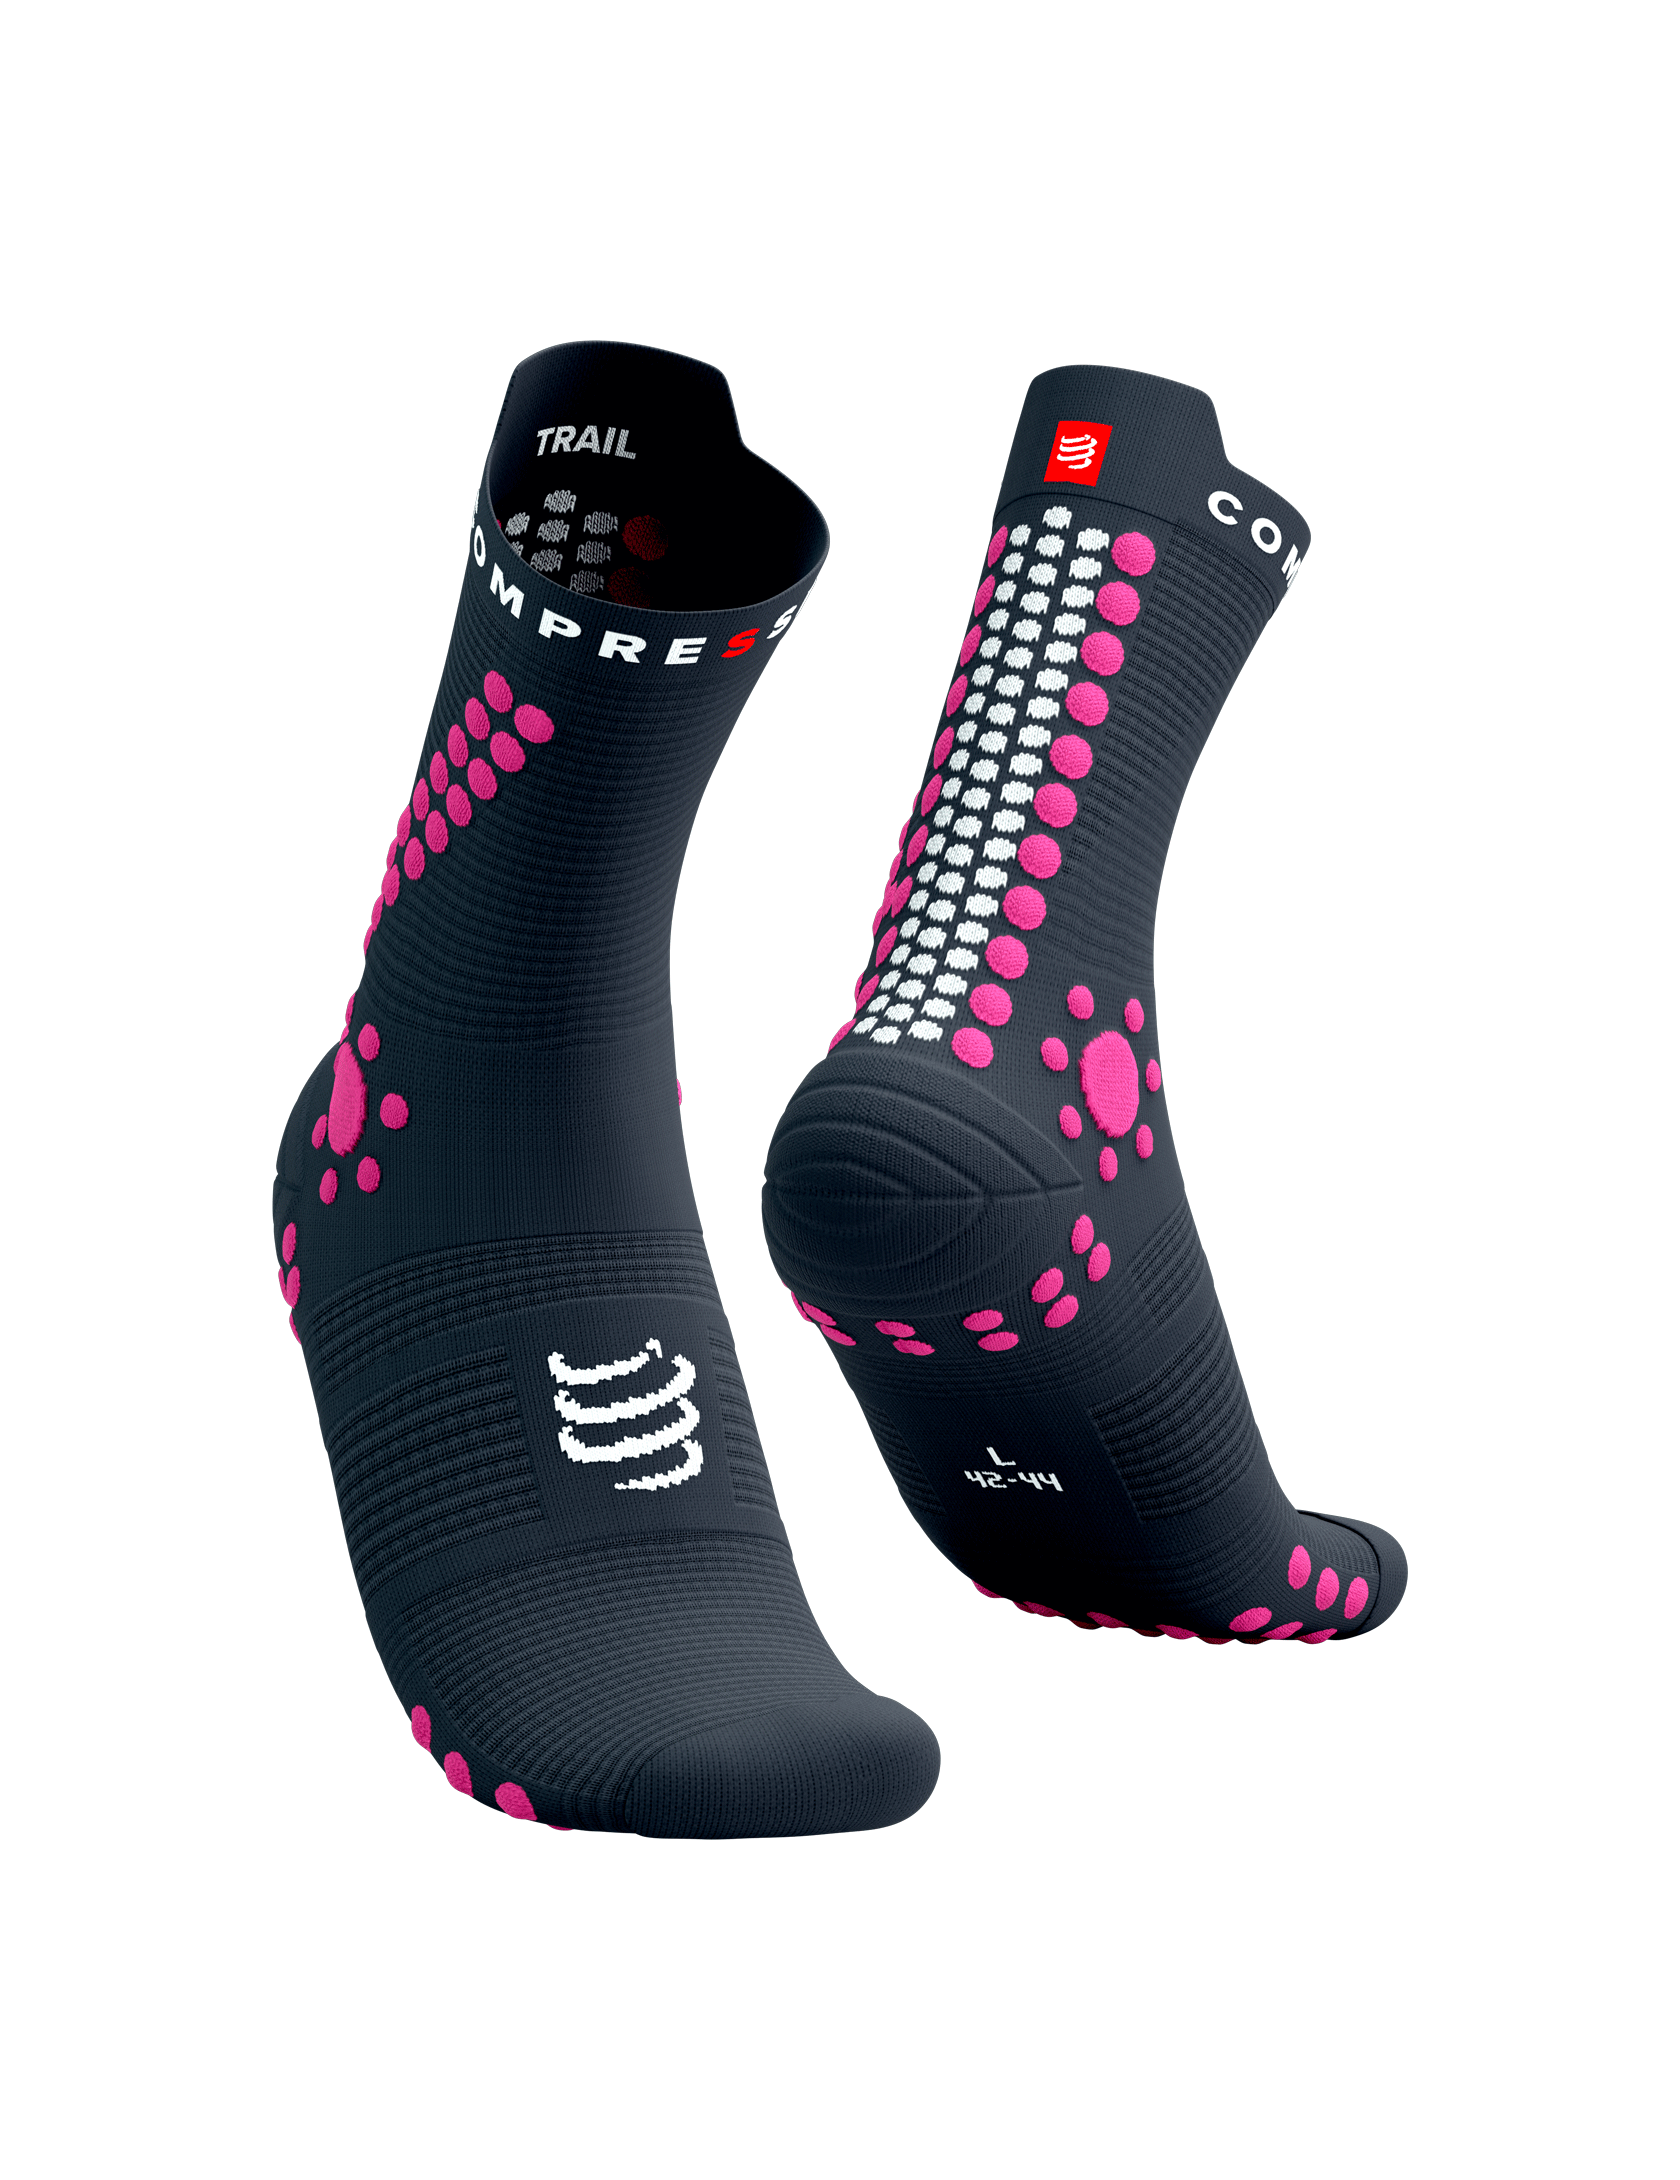 Calcetines Trail running Pro Racing Socks V3 Smart Compressport –   - La Tienda de Running